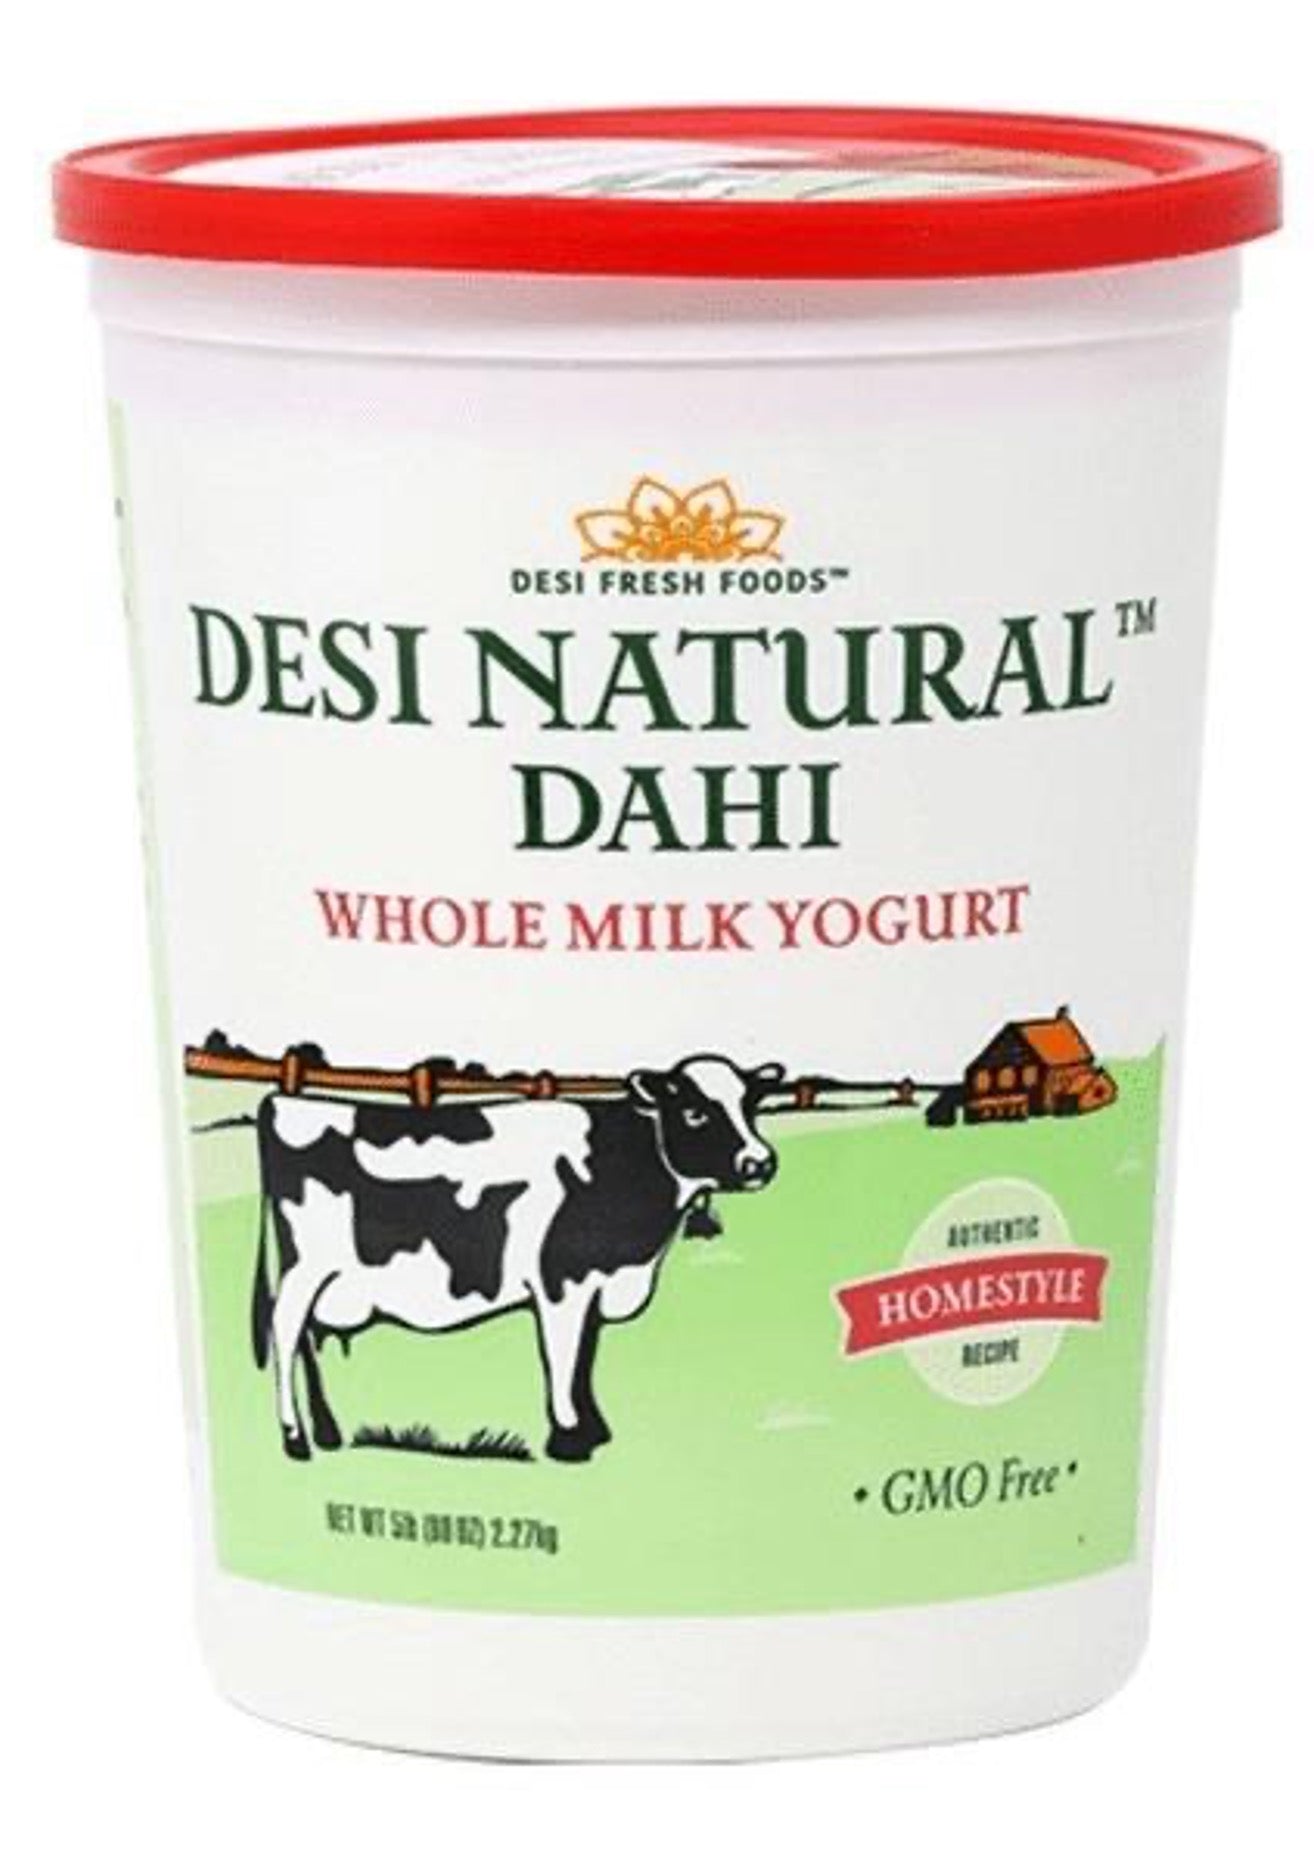 Desi Natural Dahi Whole Milk Yogurt